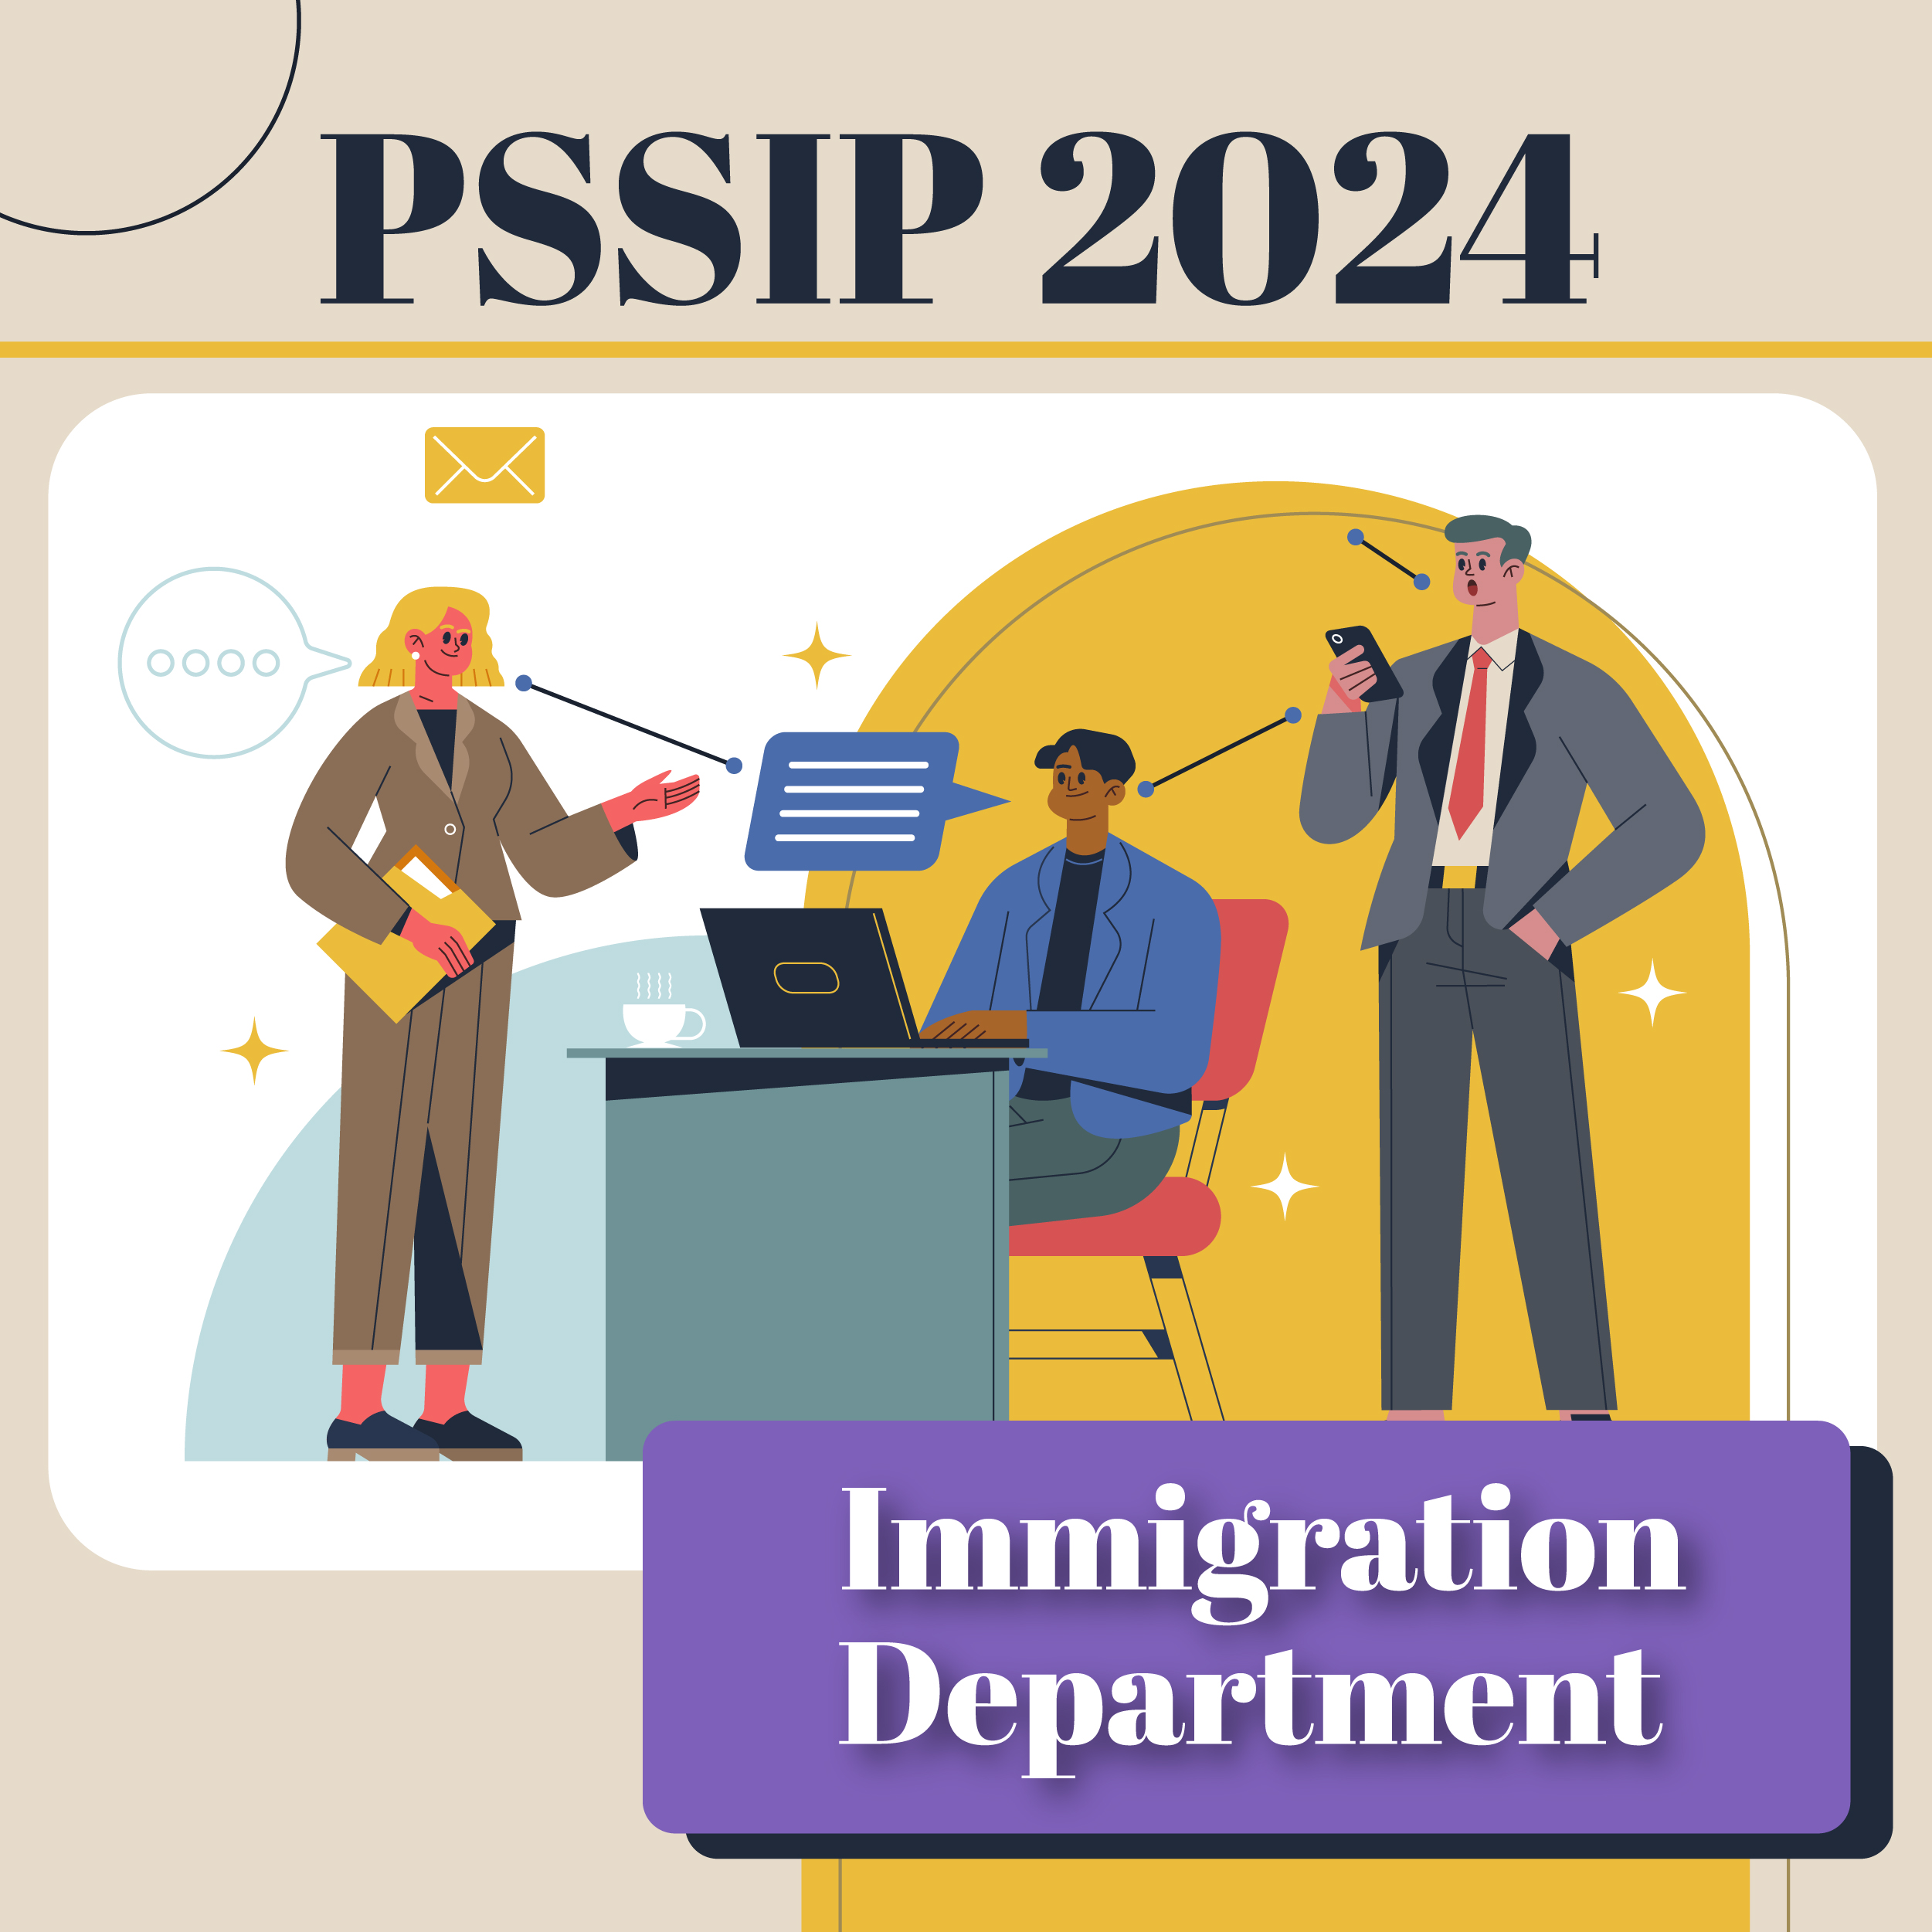 PSSIP2024 – Immigration Department